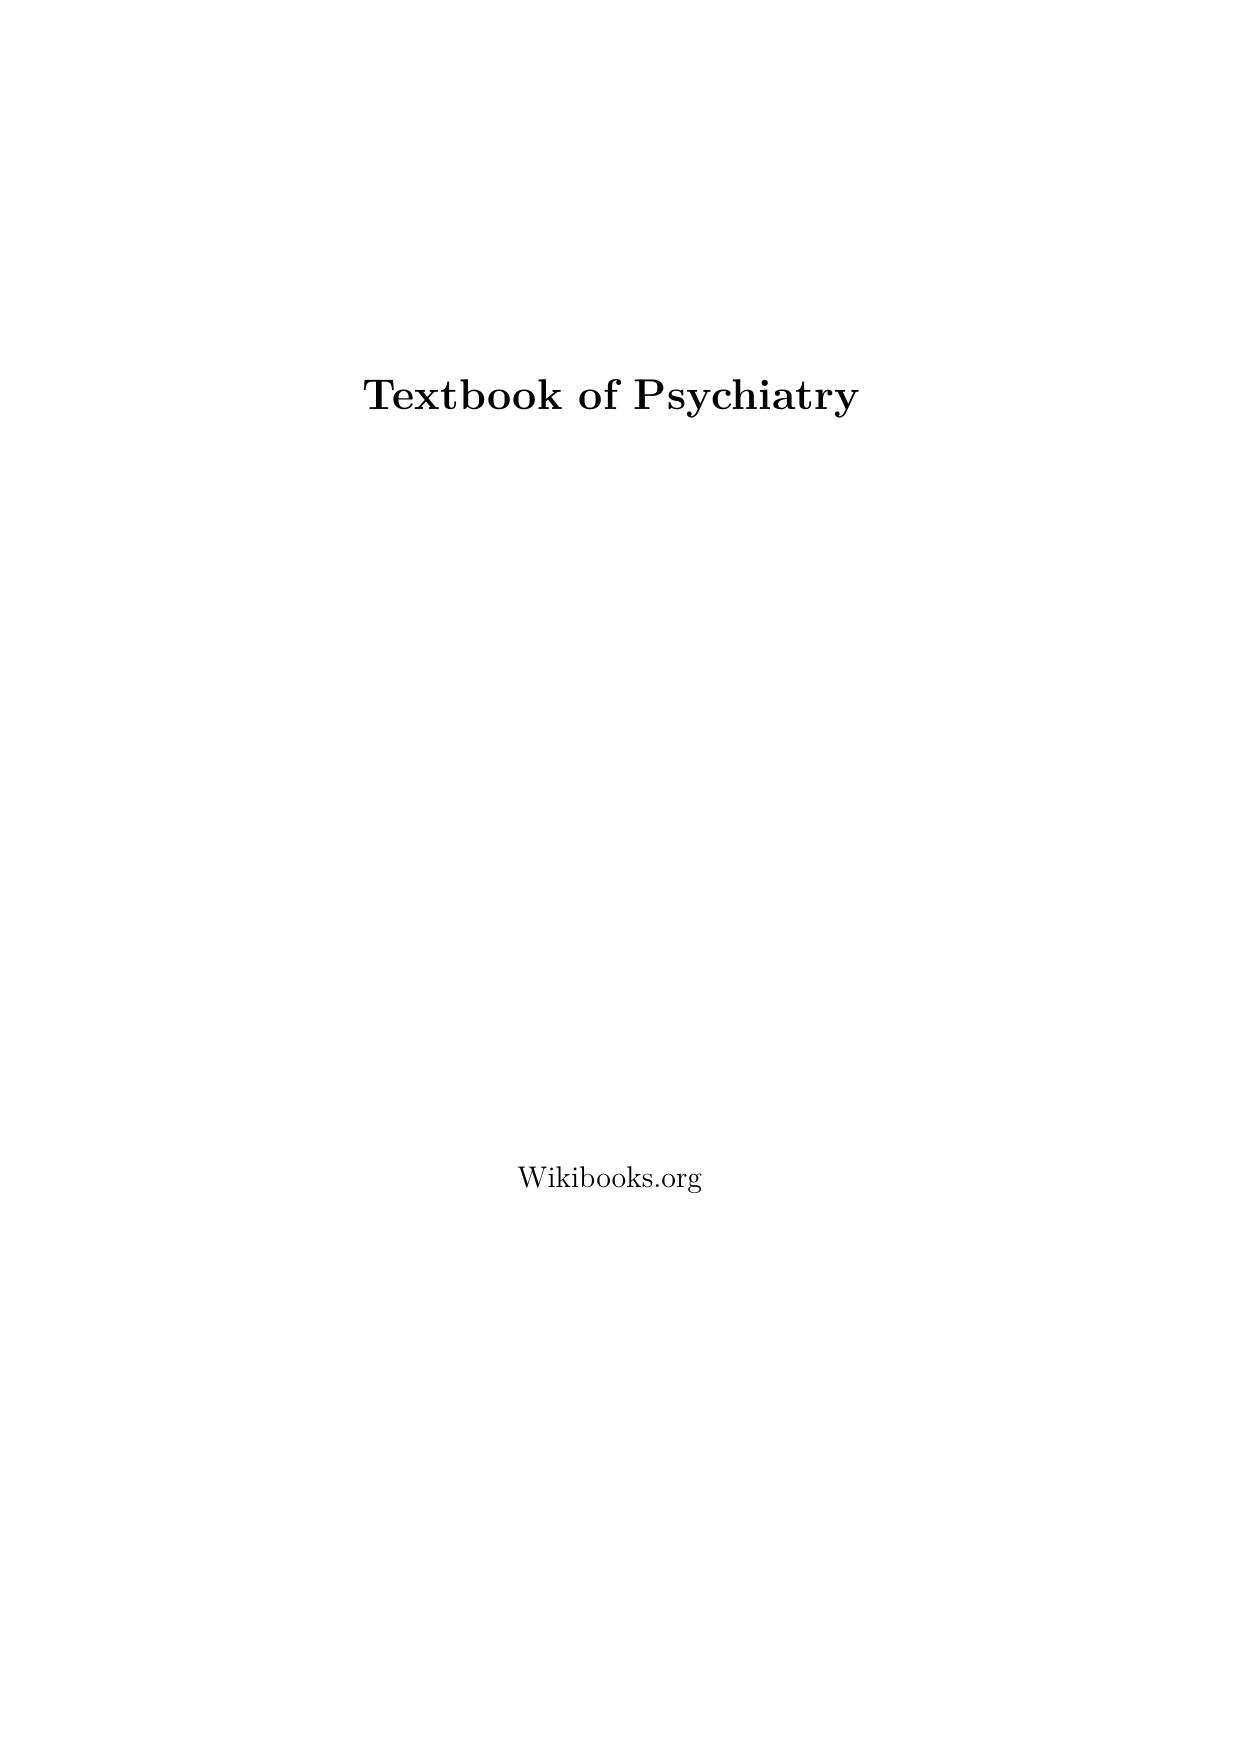 Textbook of Psychiatry 2013